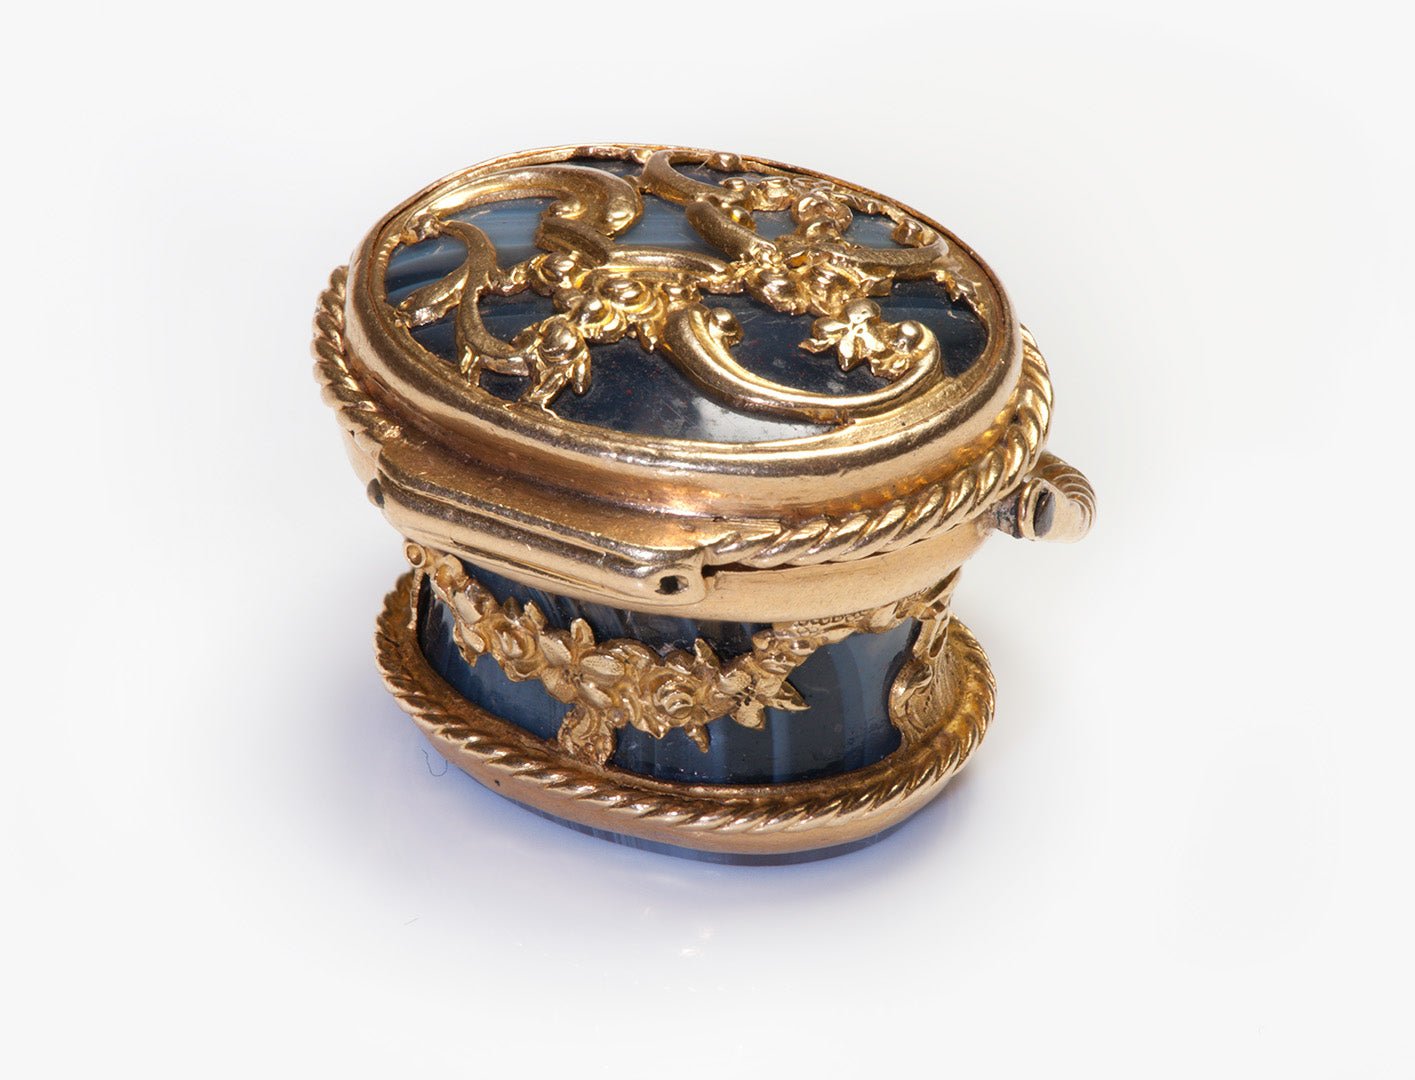 Antique Georgian French Gold Agate Miniature Basket